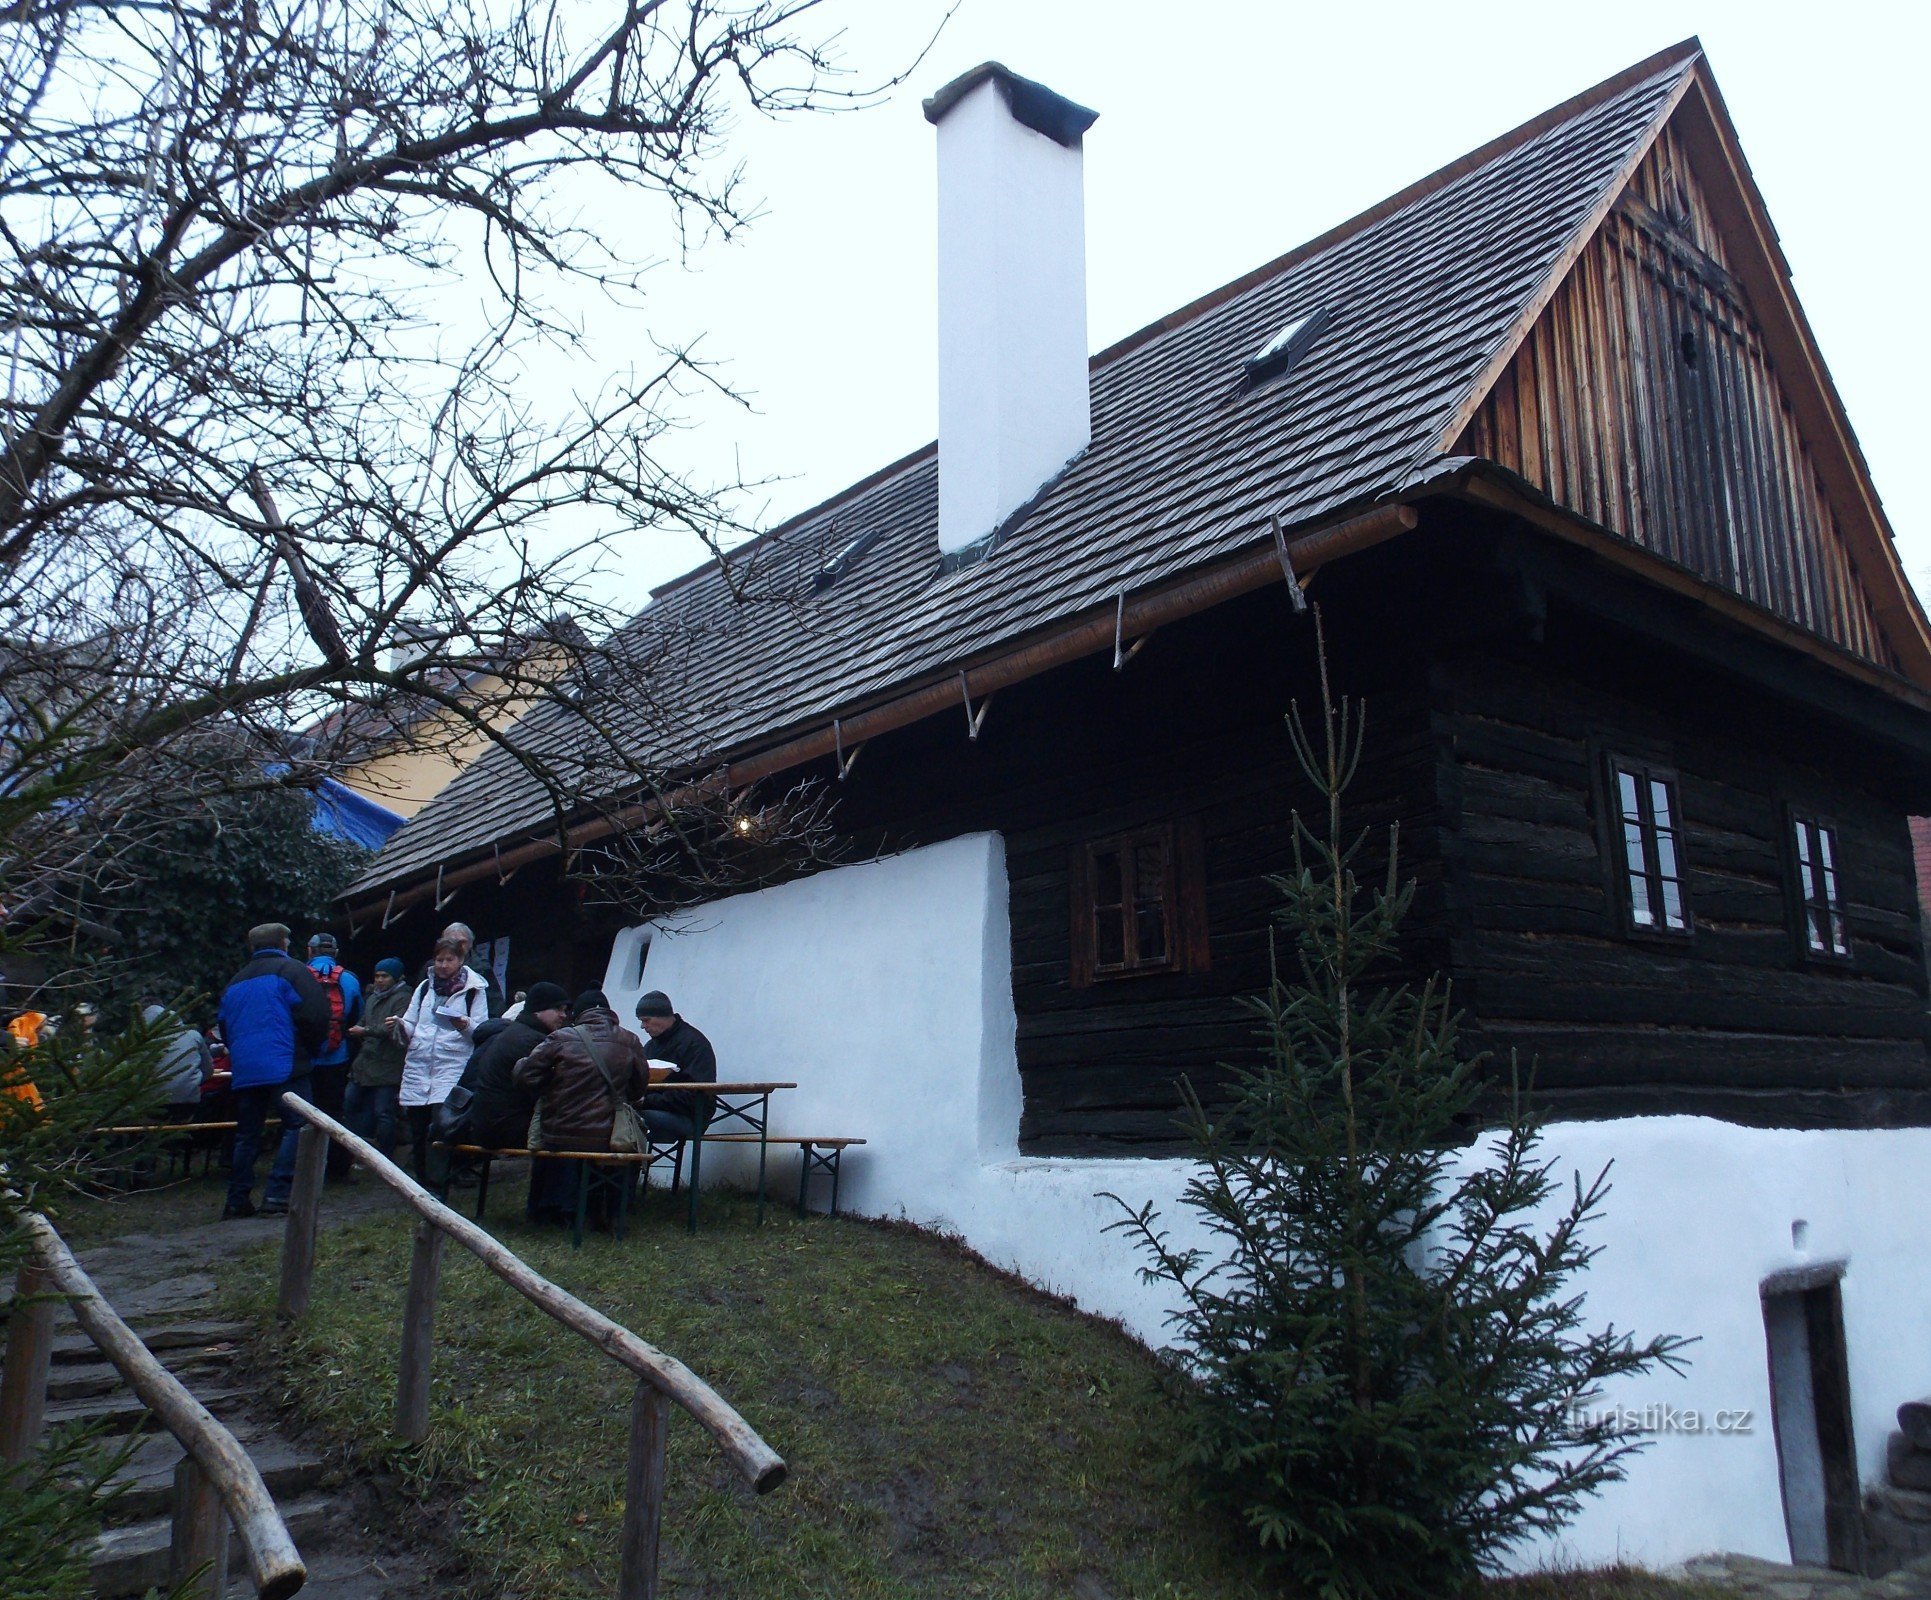 Walachische Holzhäuser in Valašské Klobouky